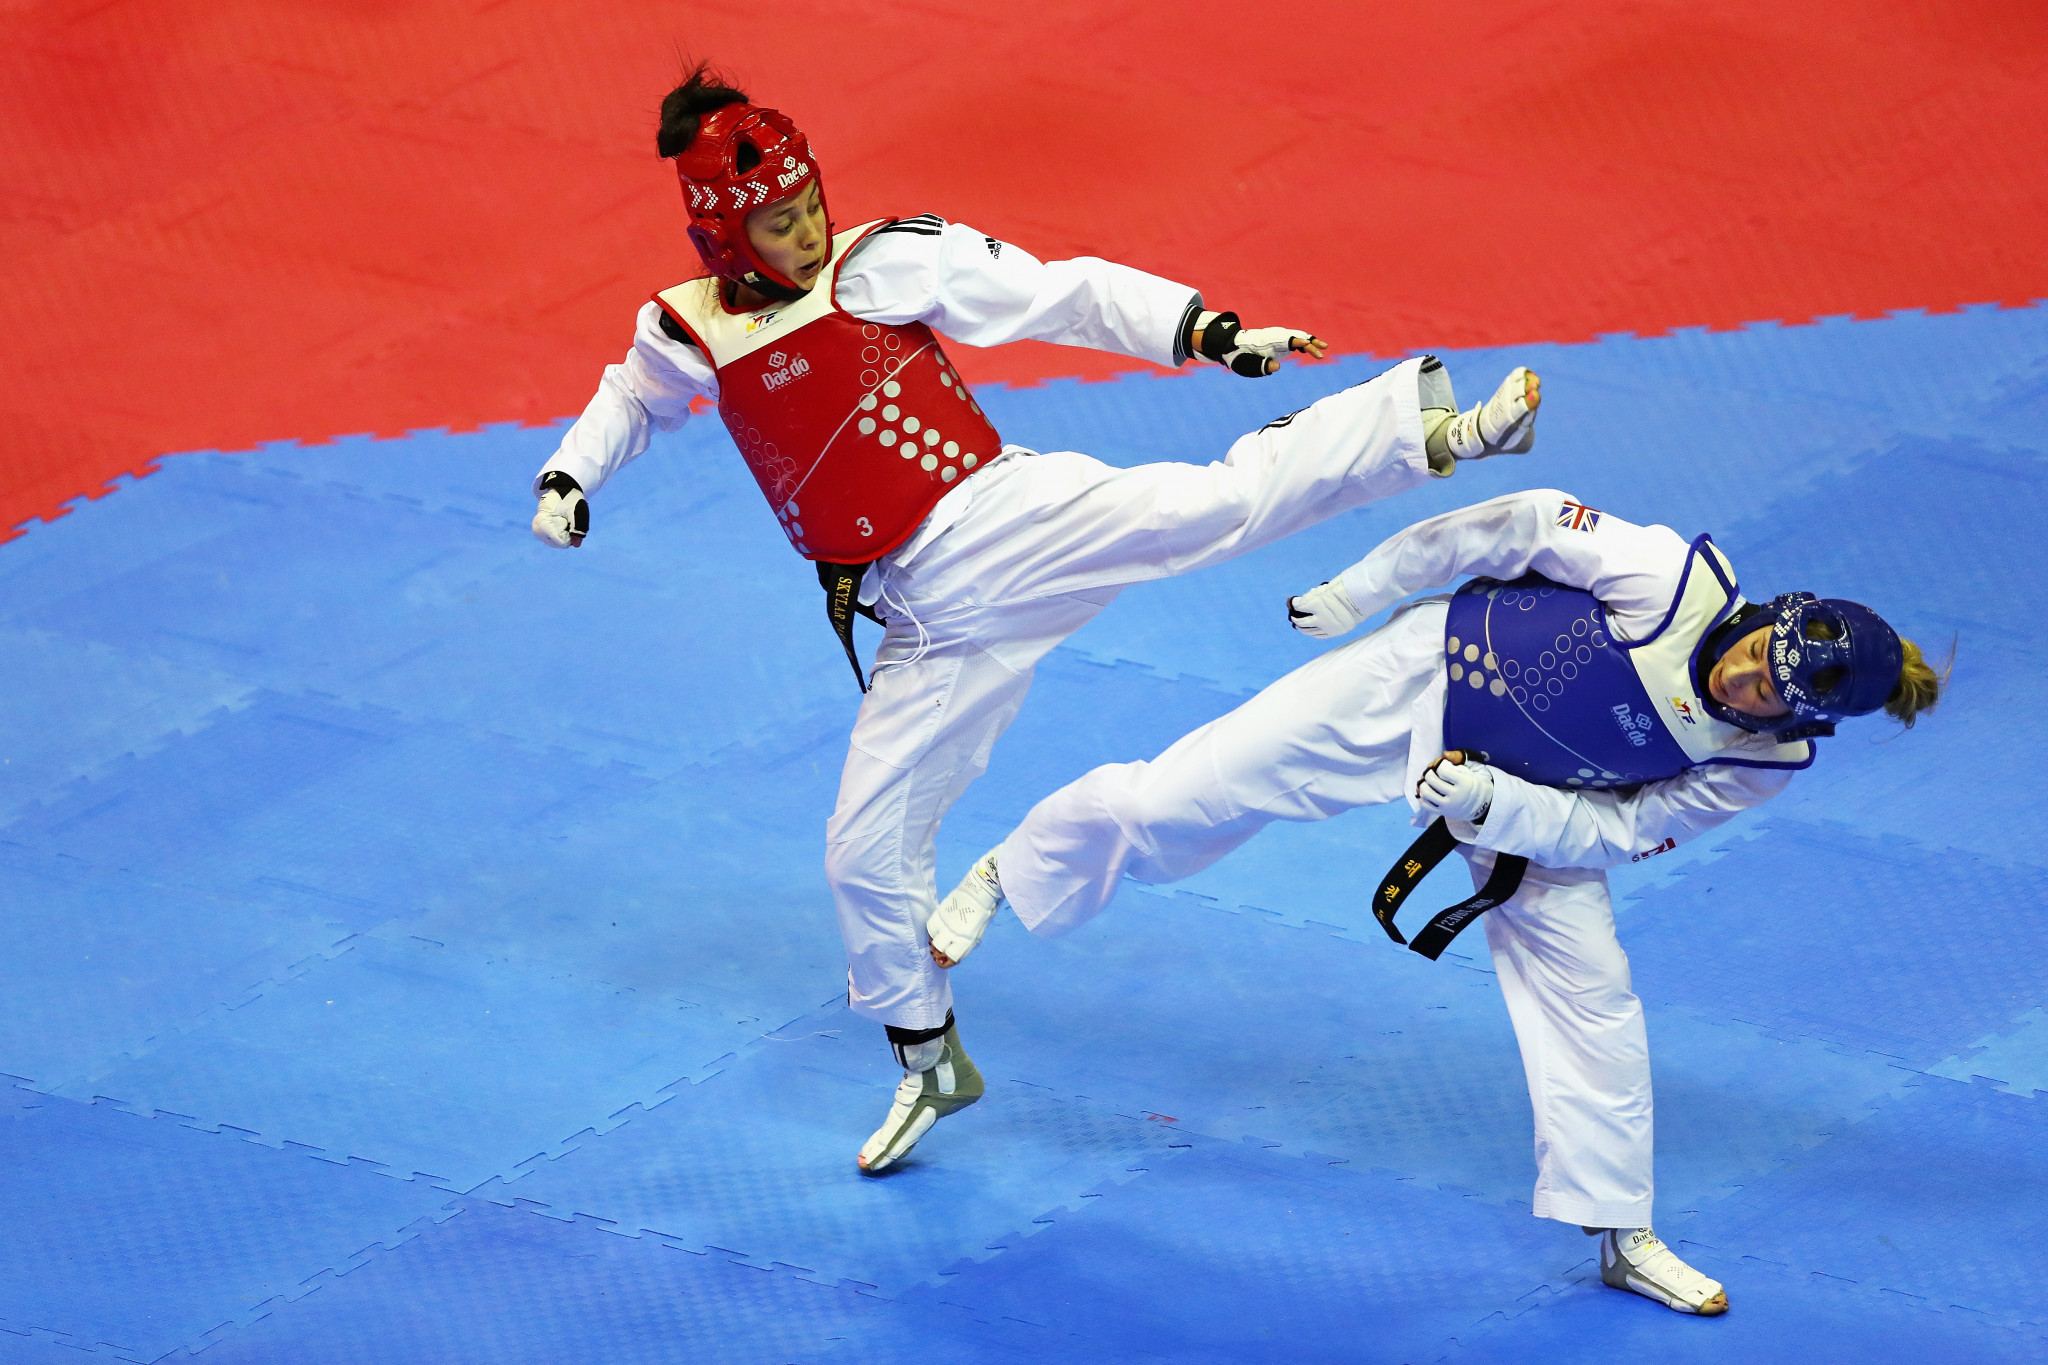 Taekwondo Canada President congratulates Park on Olympic qualification